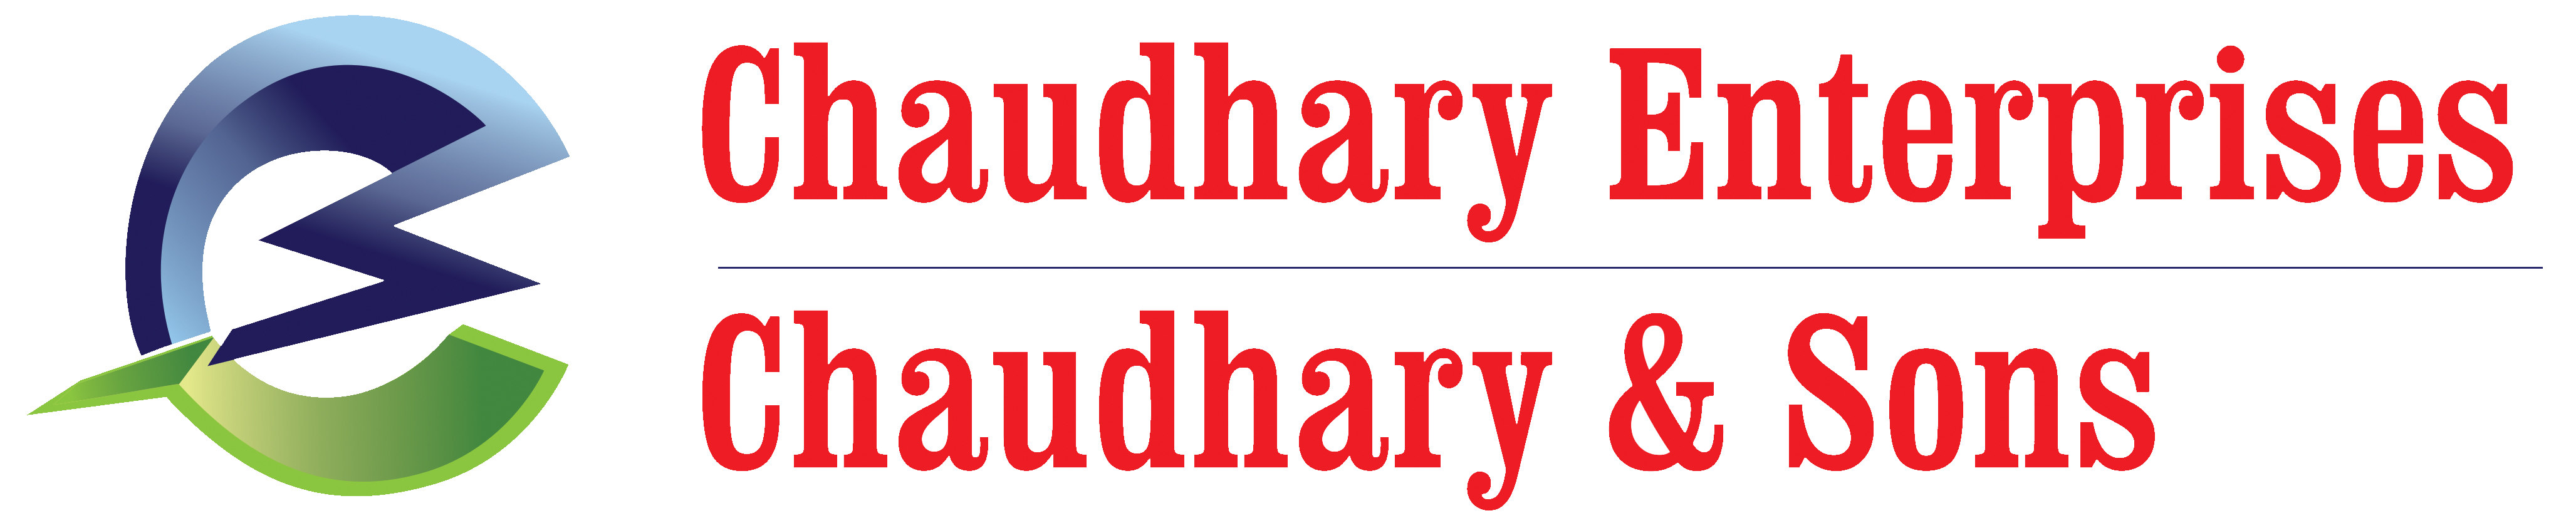 Chaudhary Enterprises